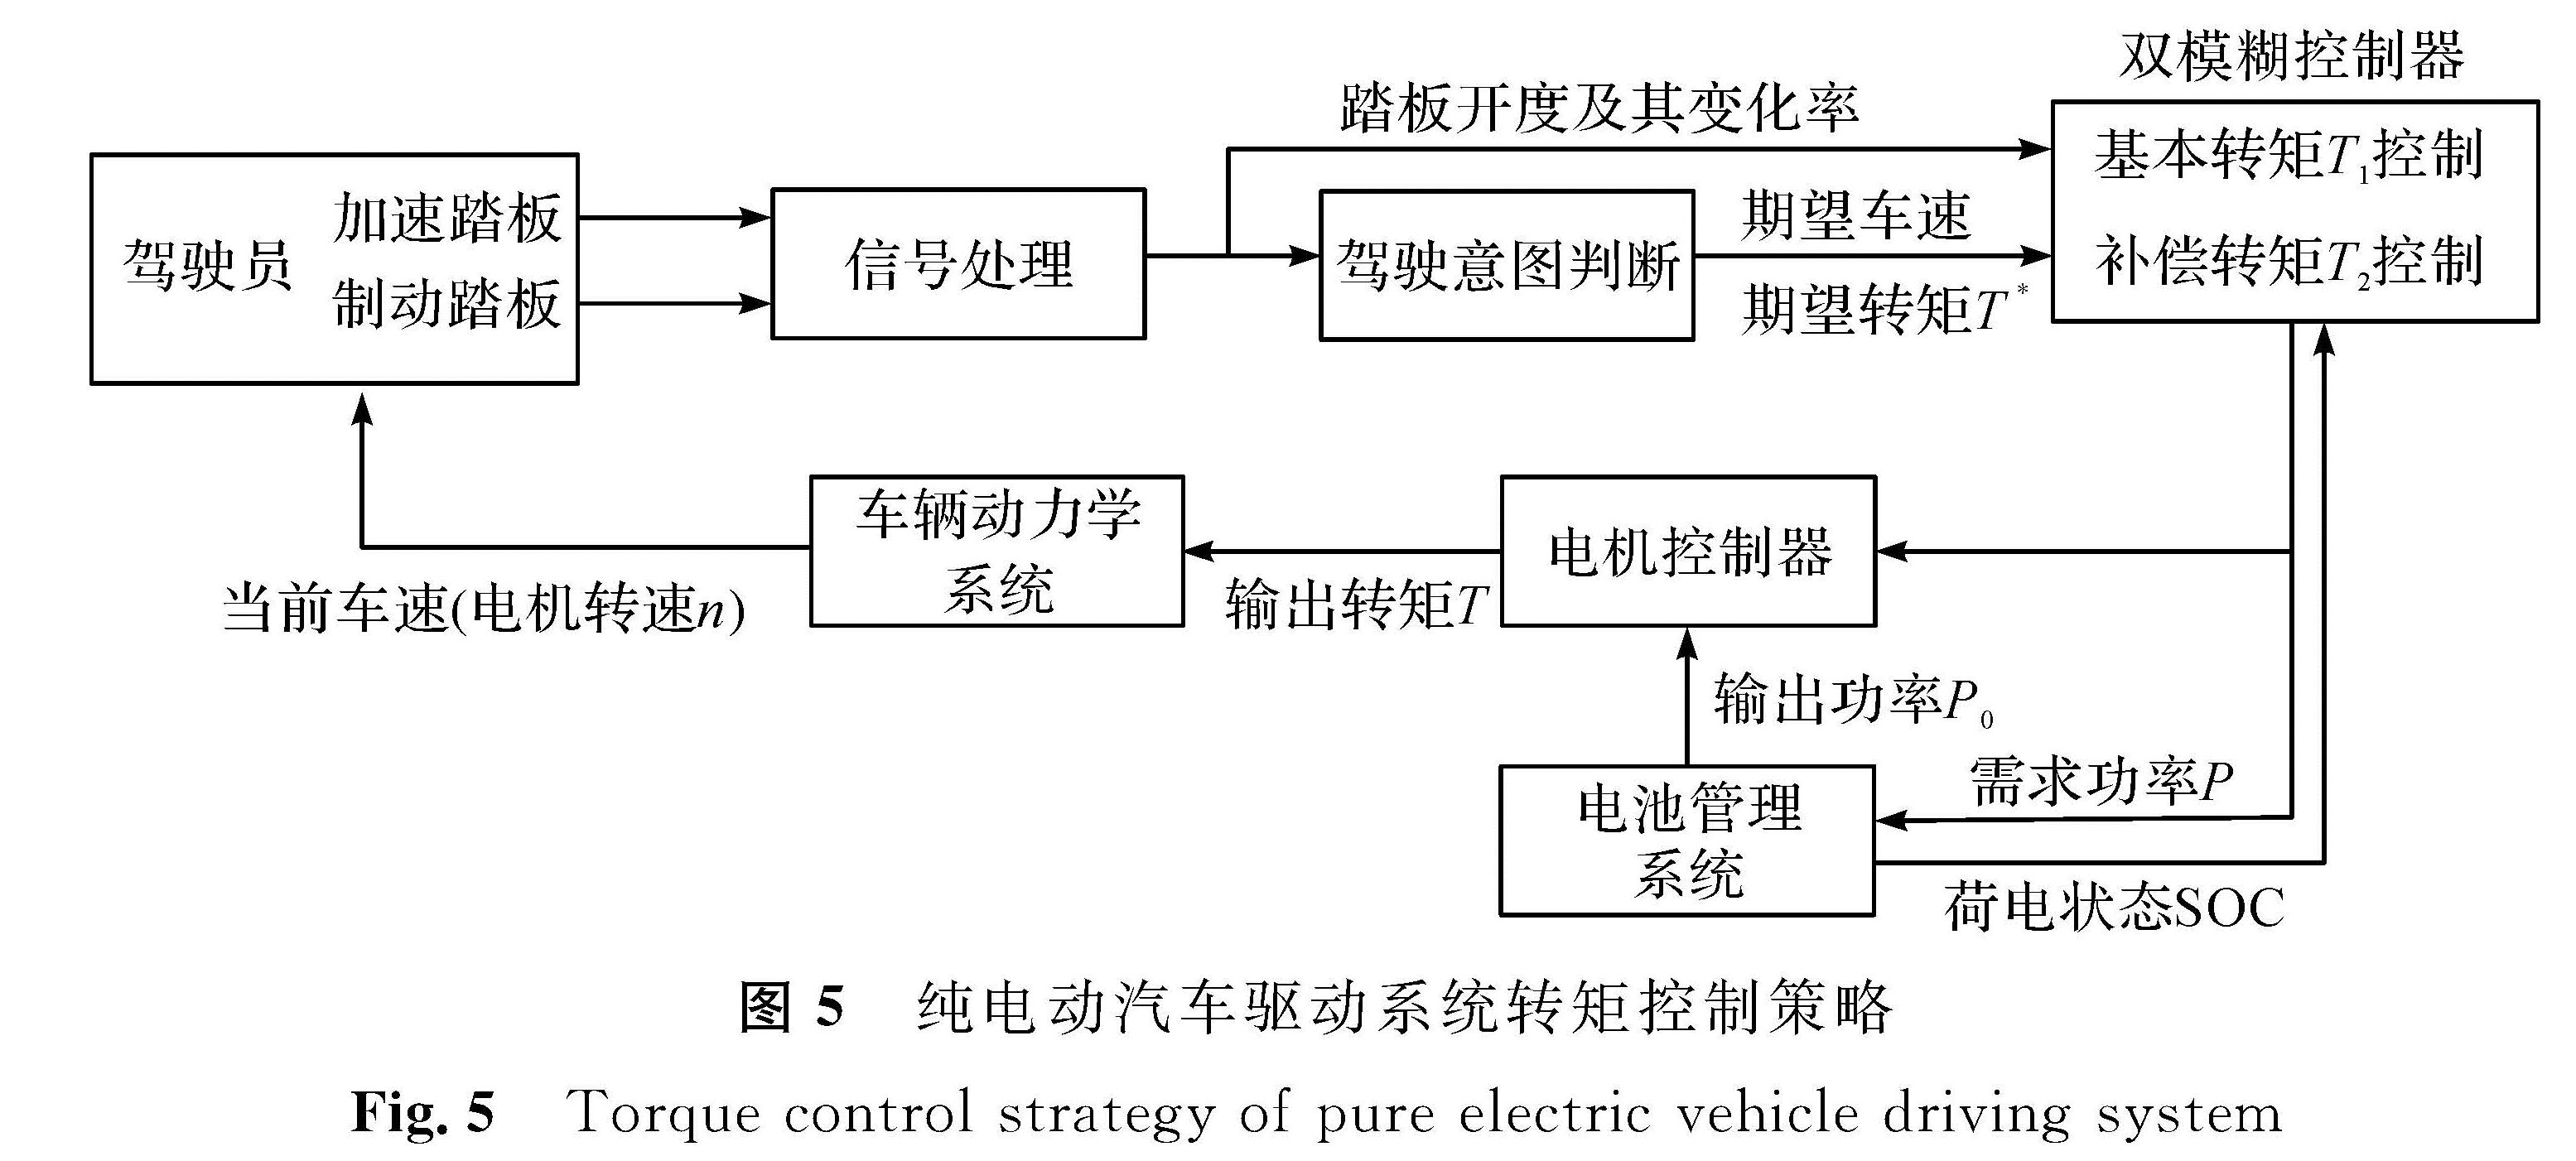 图5 纯电动汽车驱动系统转矩控制策略<br/>Fig.5 Torque control strategy of pure electric vehicle driving system